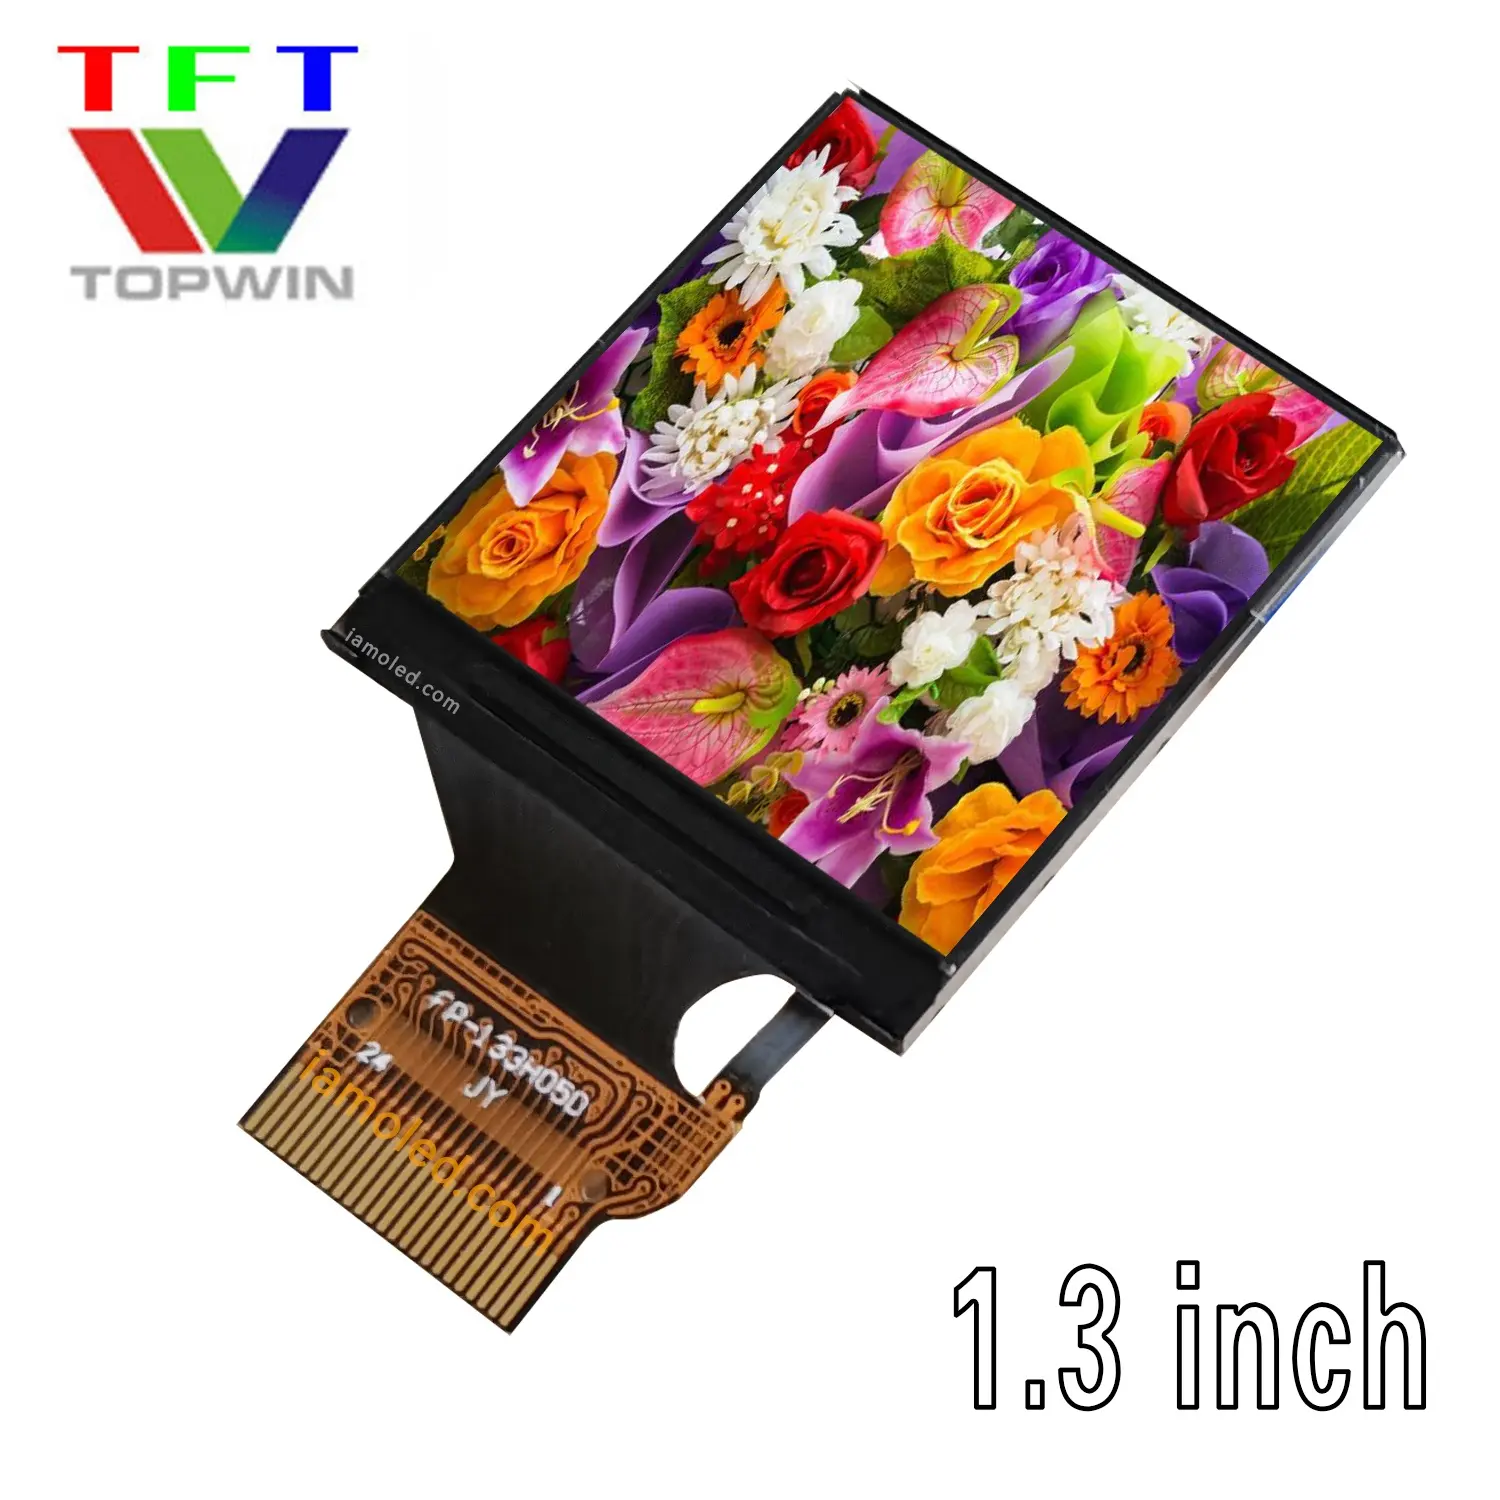 Topwin tampilan TFT-LCD kecil 1.3 inci 240x240 piksel multiwarna connector konektor tipe 4-kawat SPI tampilan antarmuka paralel